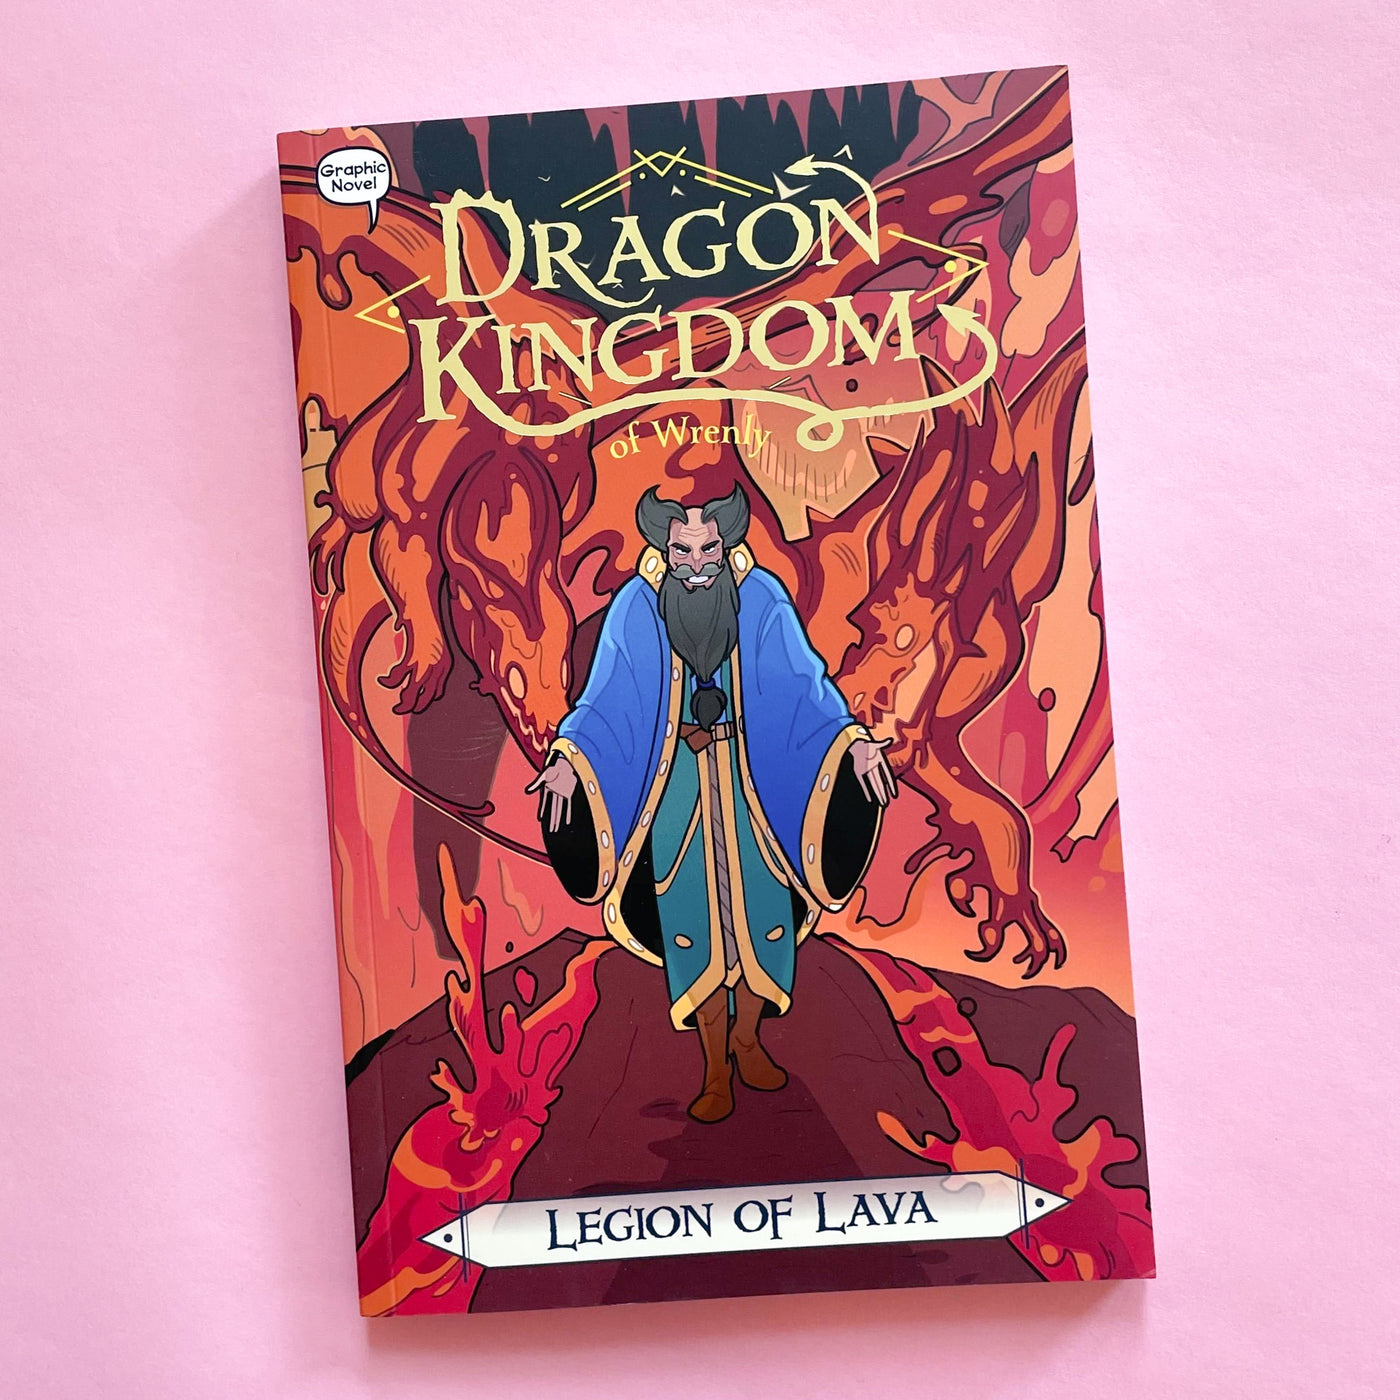 Legion of Lava: #9 Dragon Kingdom of Wrenly by Jordan Quinn